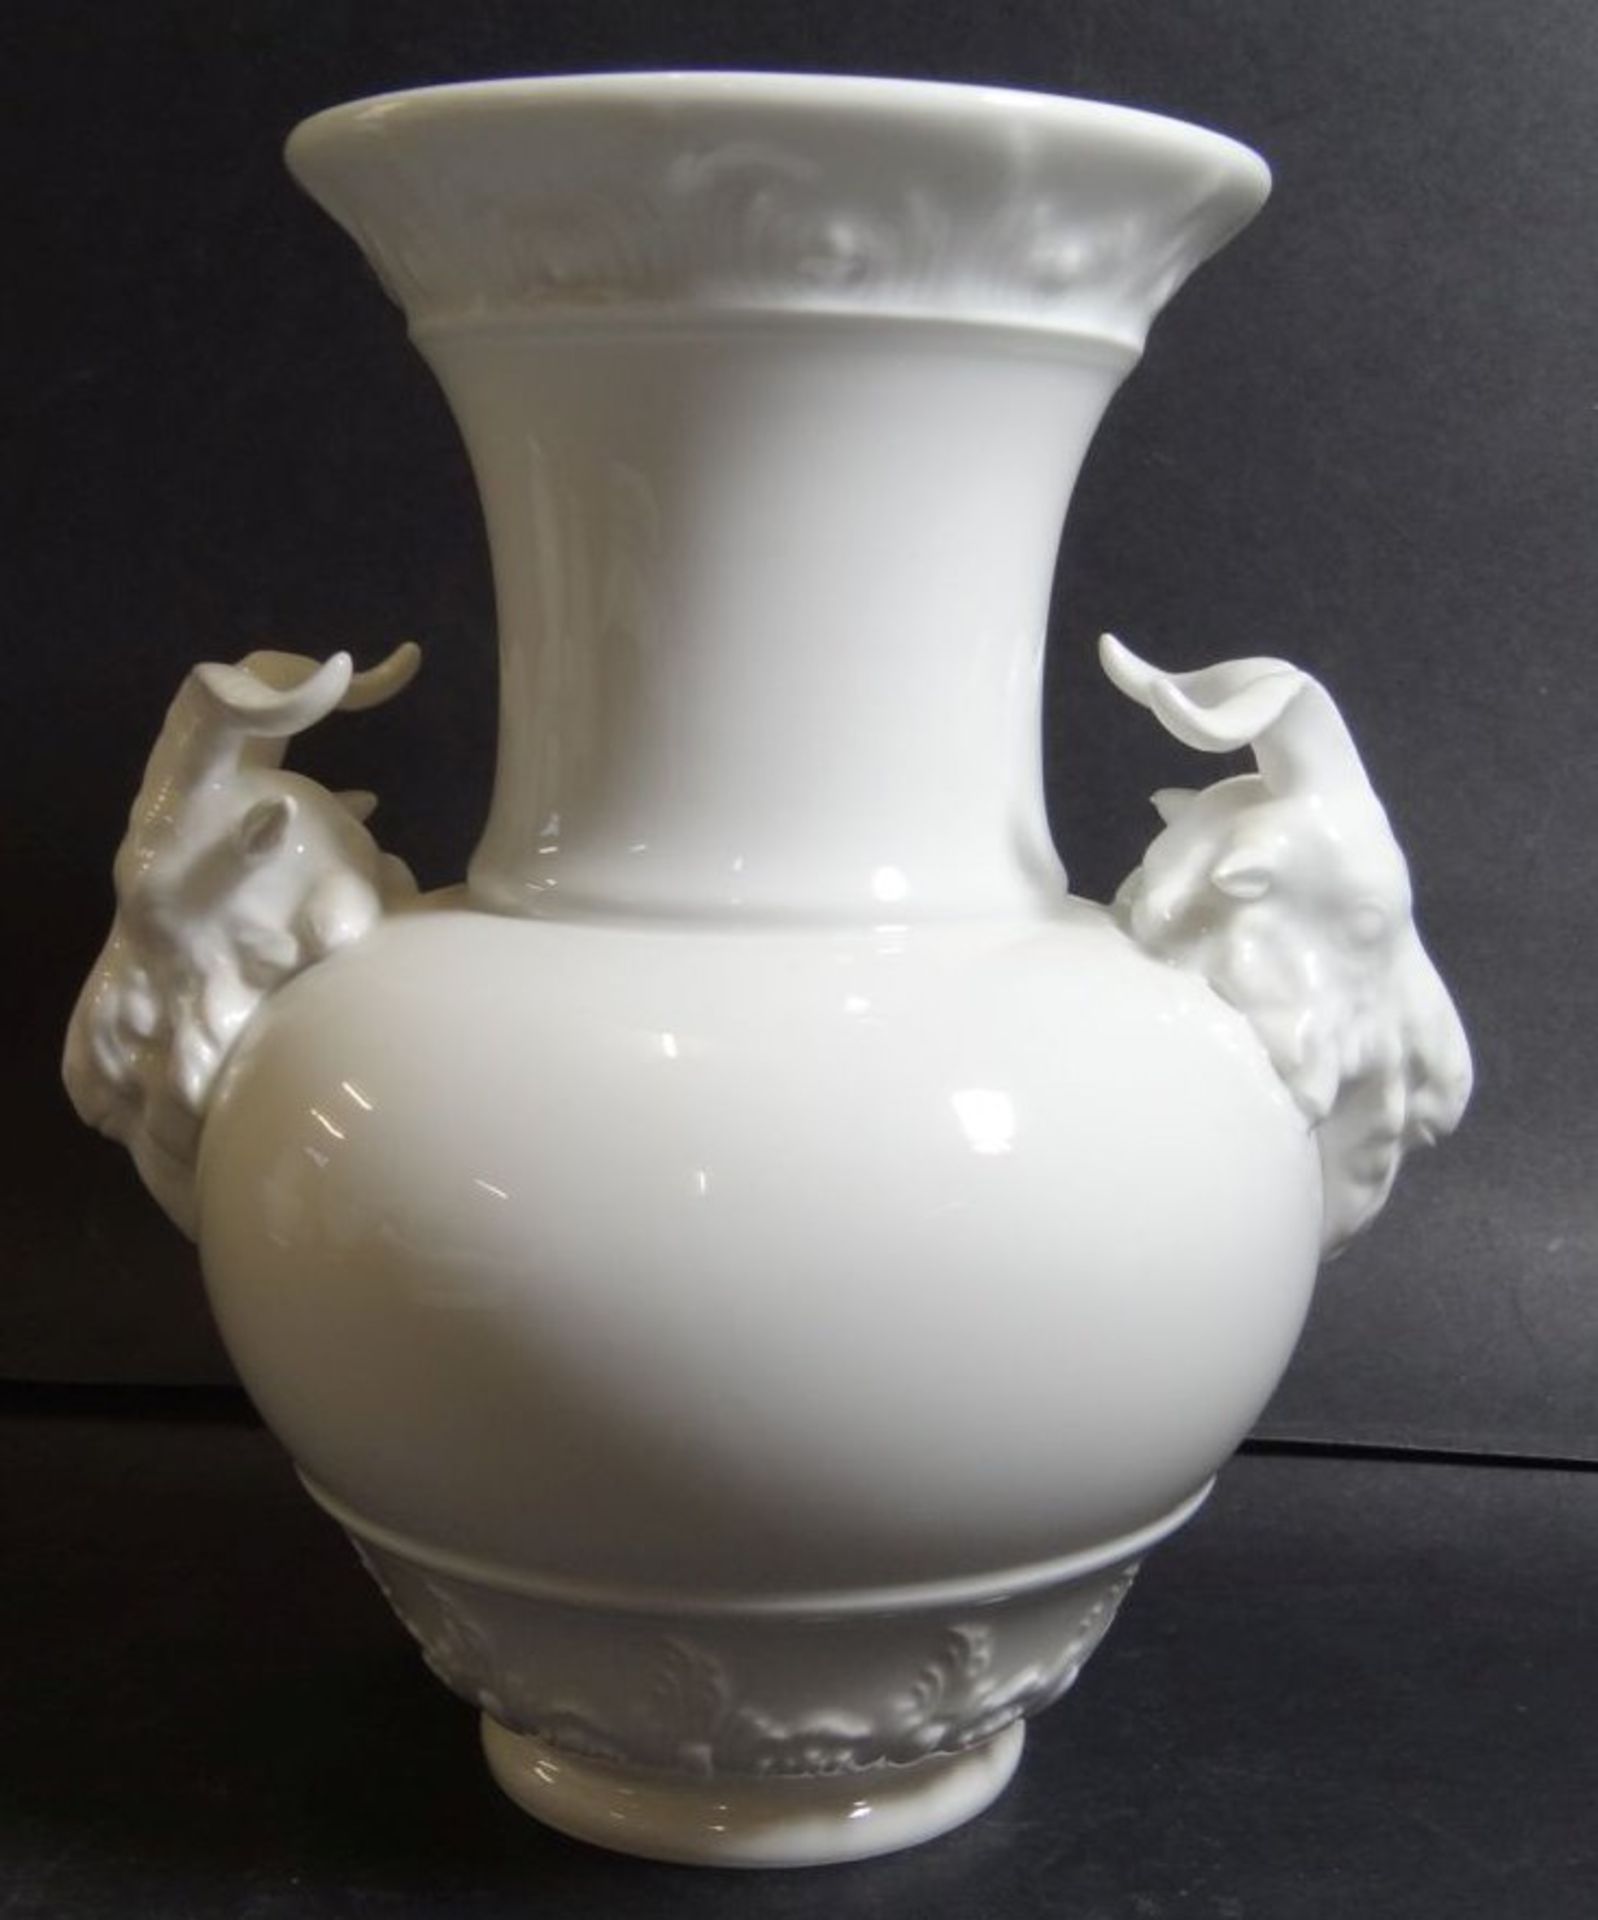 Widderkopf-Vase "KPM" Berlin, weiss, H-18 cm, guter Zustand- - -22.61 % buyer's premium on the